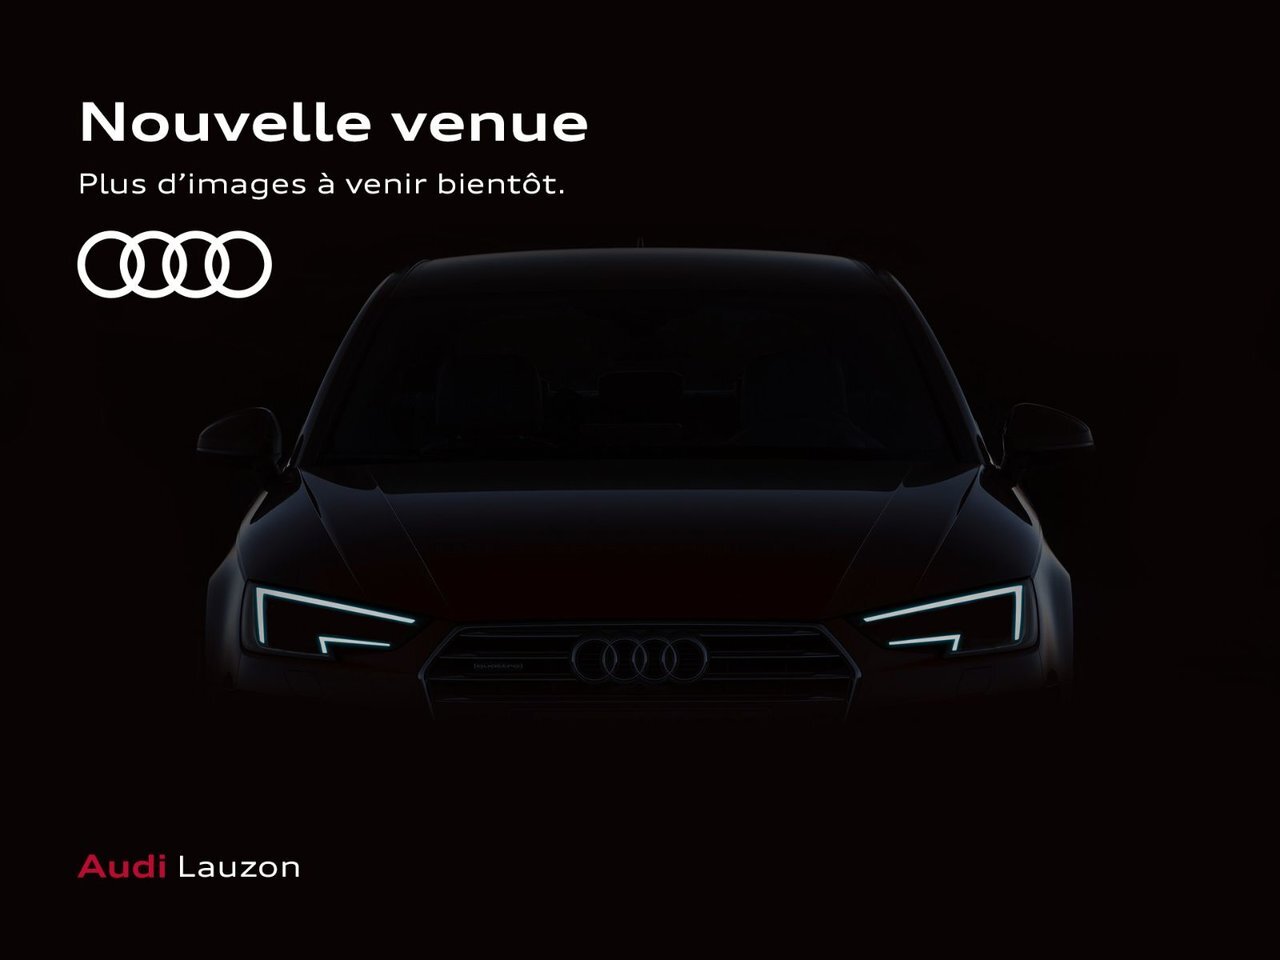 2018 Audi Q5 2.0 TFSI quattro Komfort S tronic